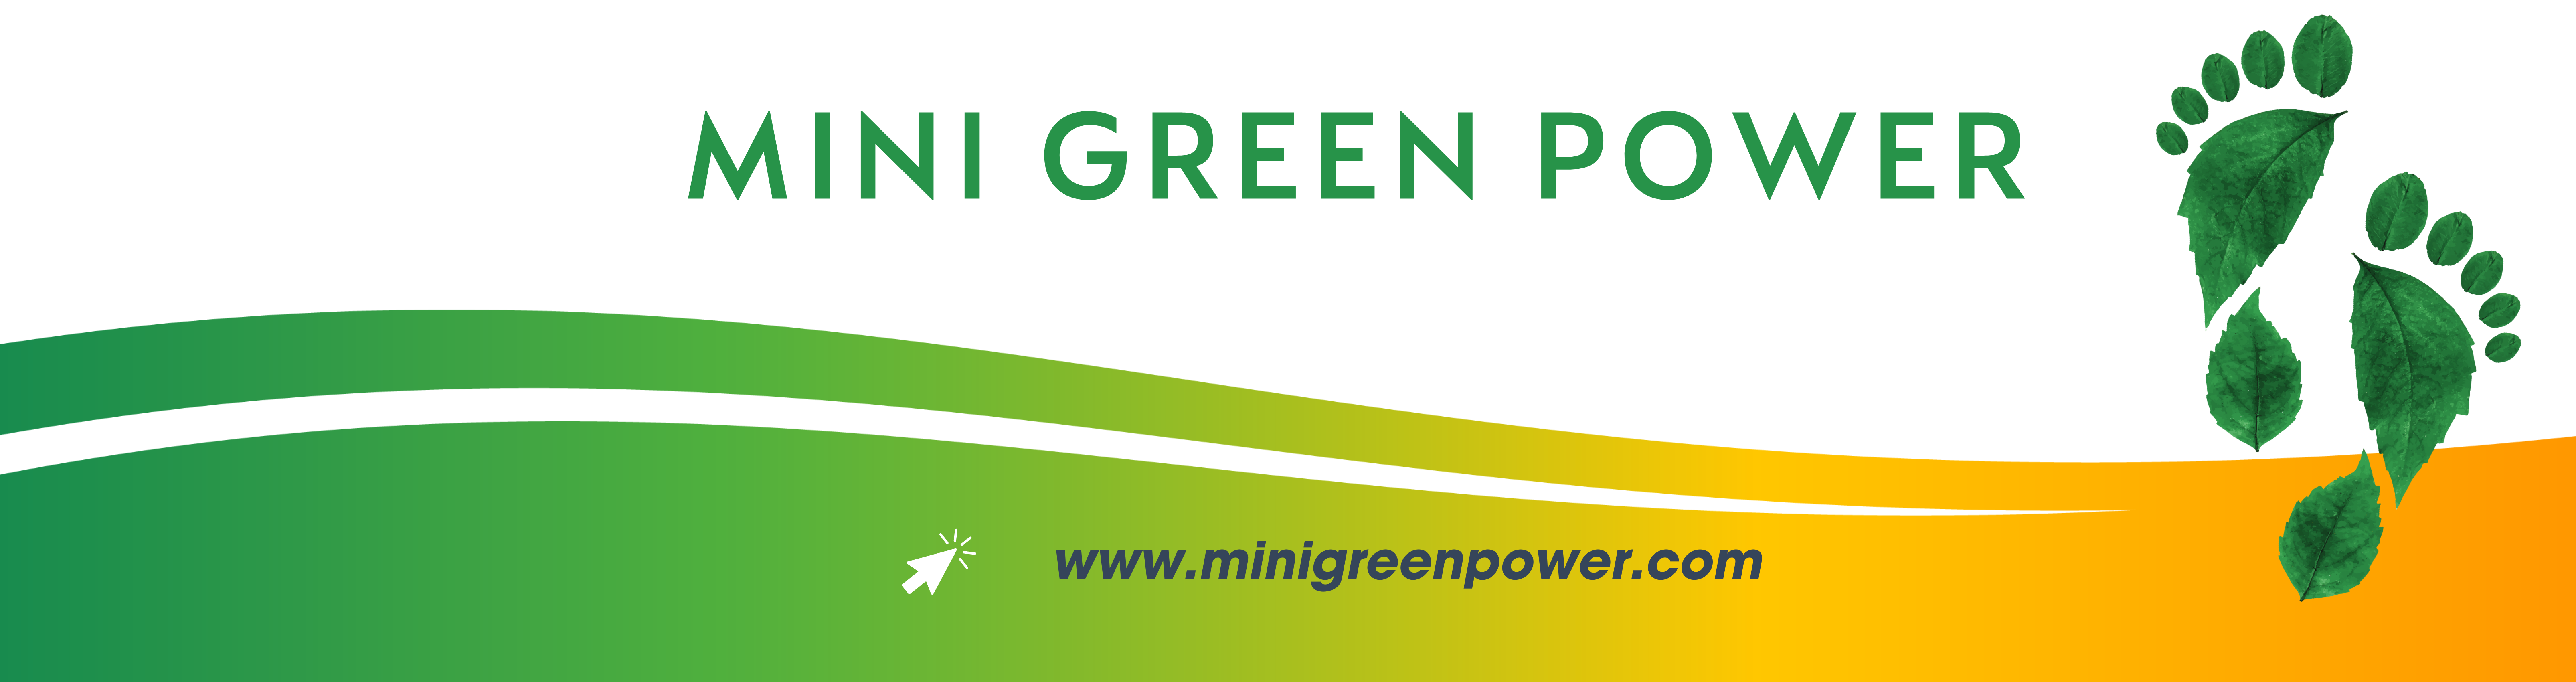 Mini Green Power